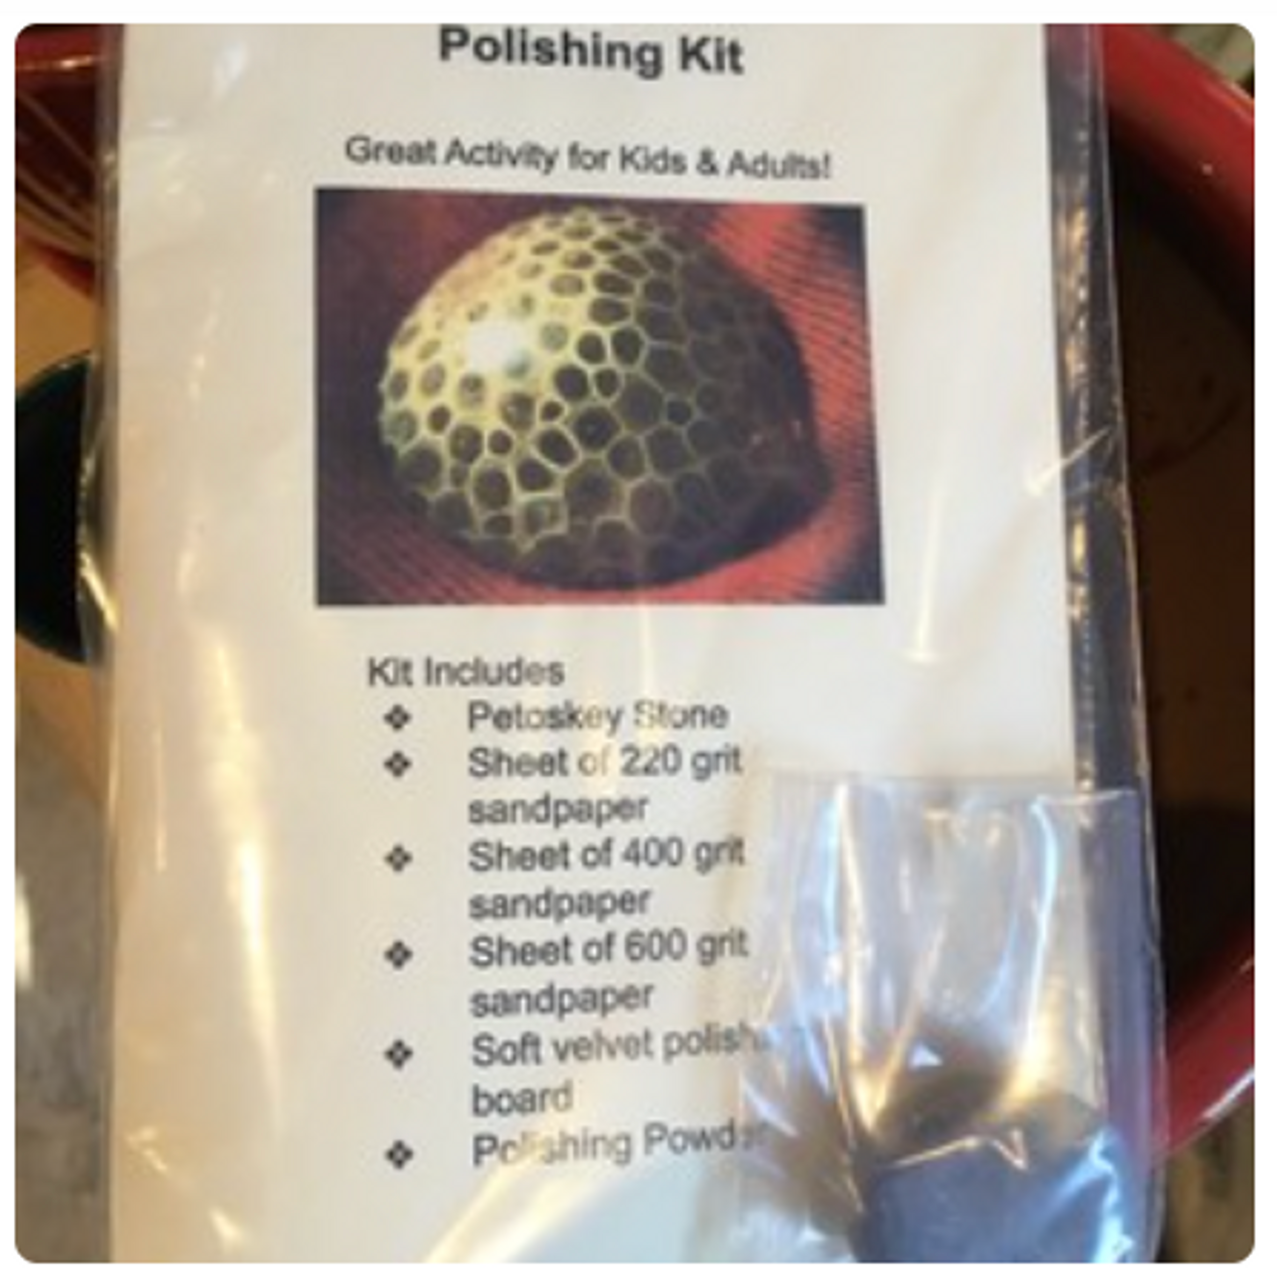 Petoskey Stone Polishing Kit